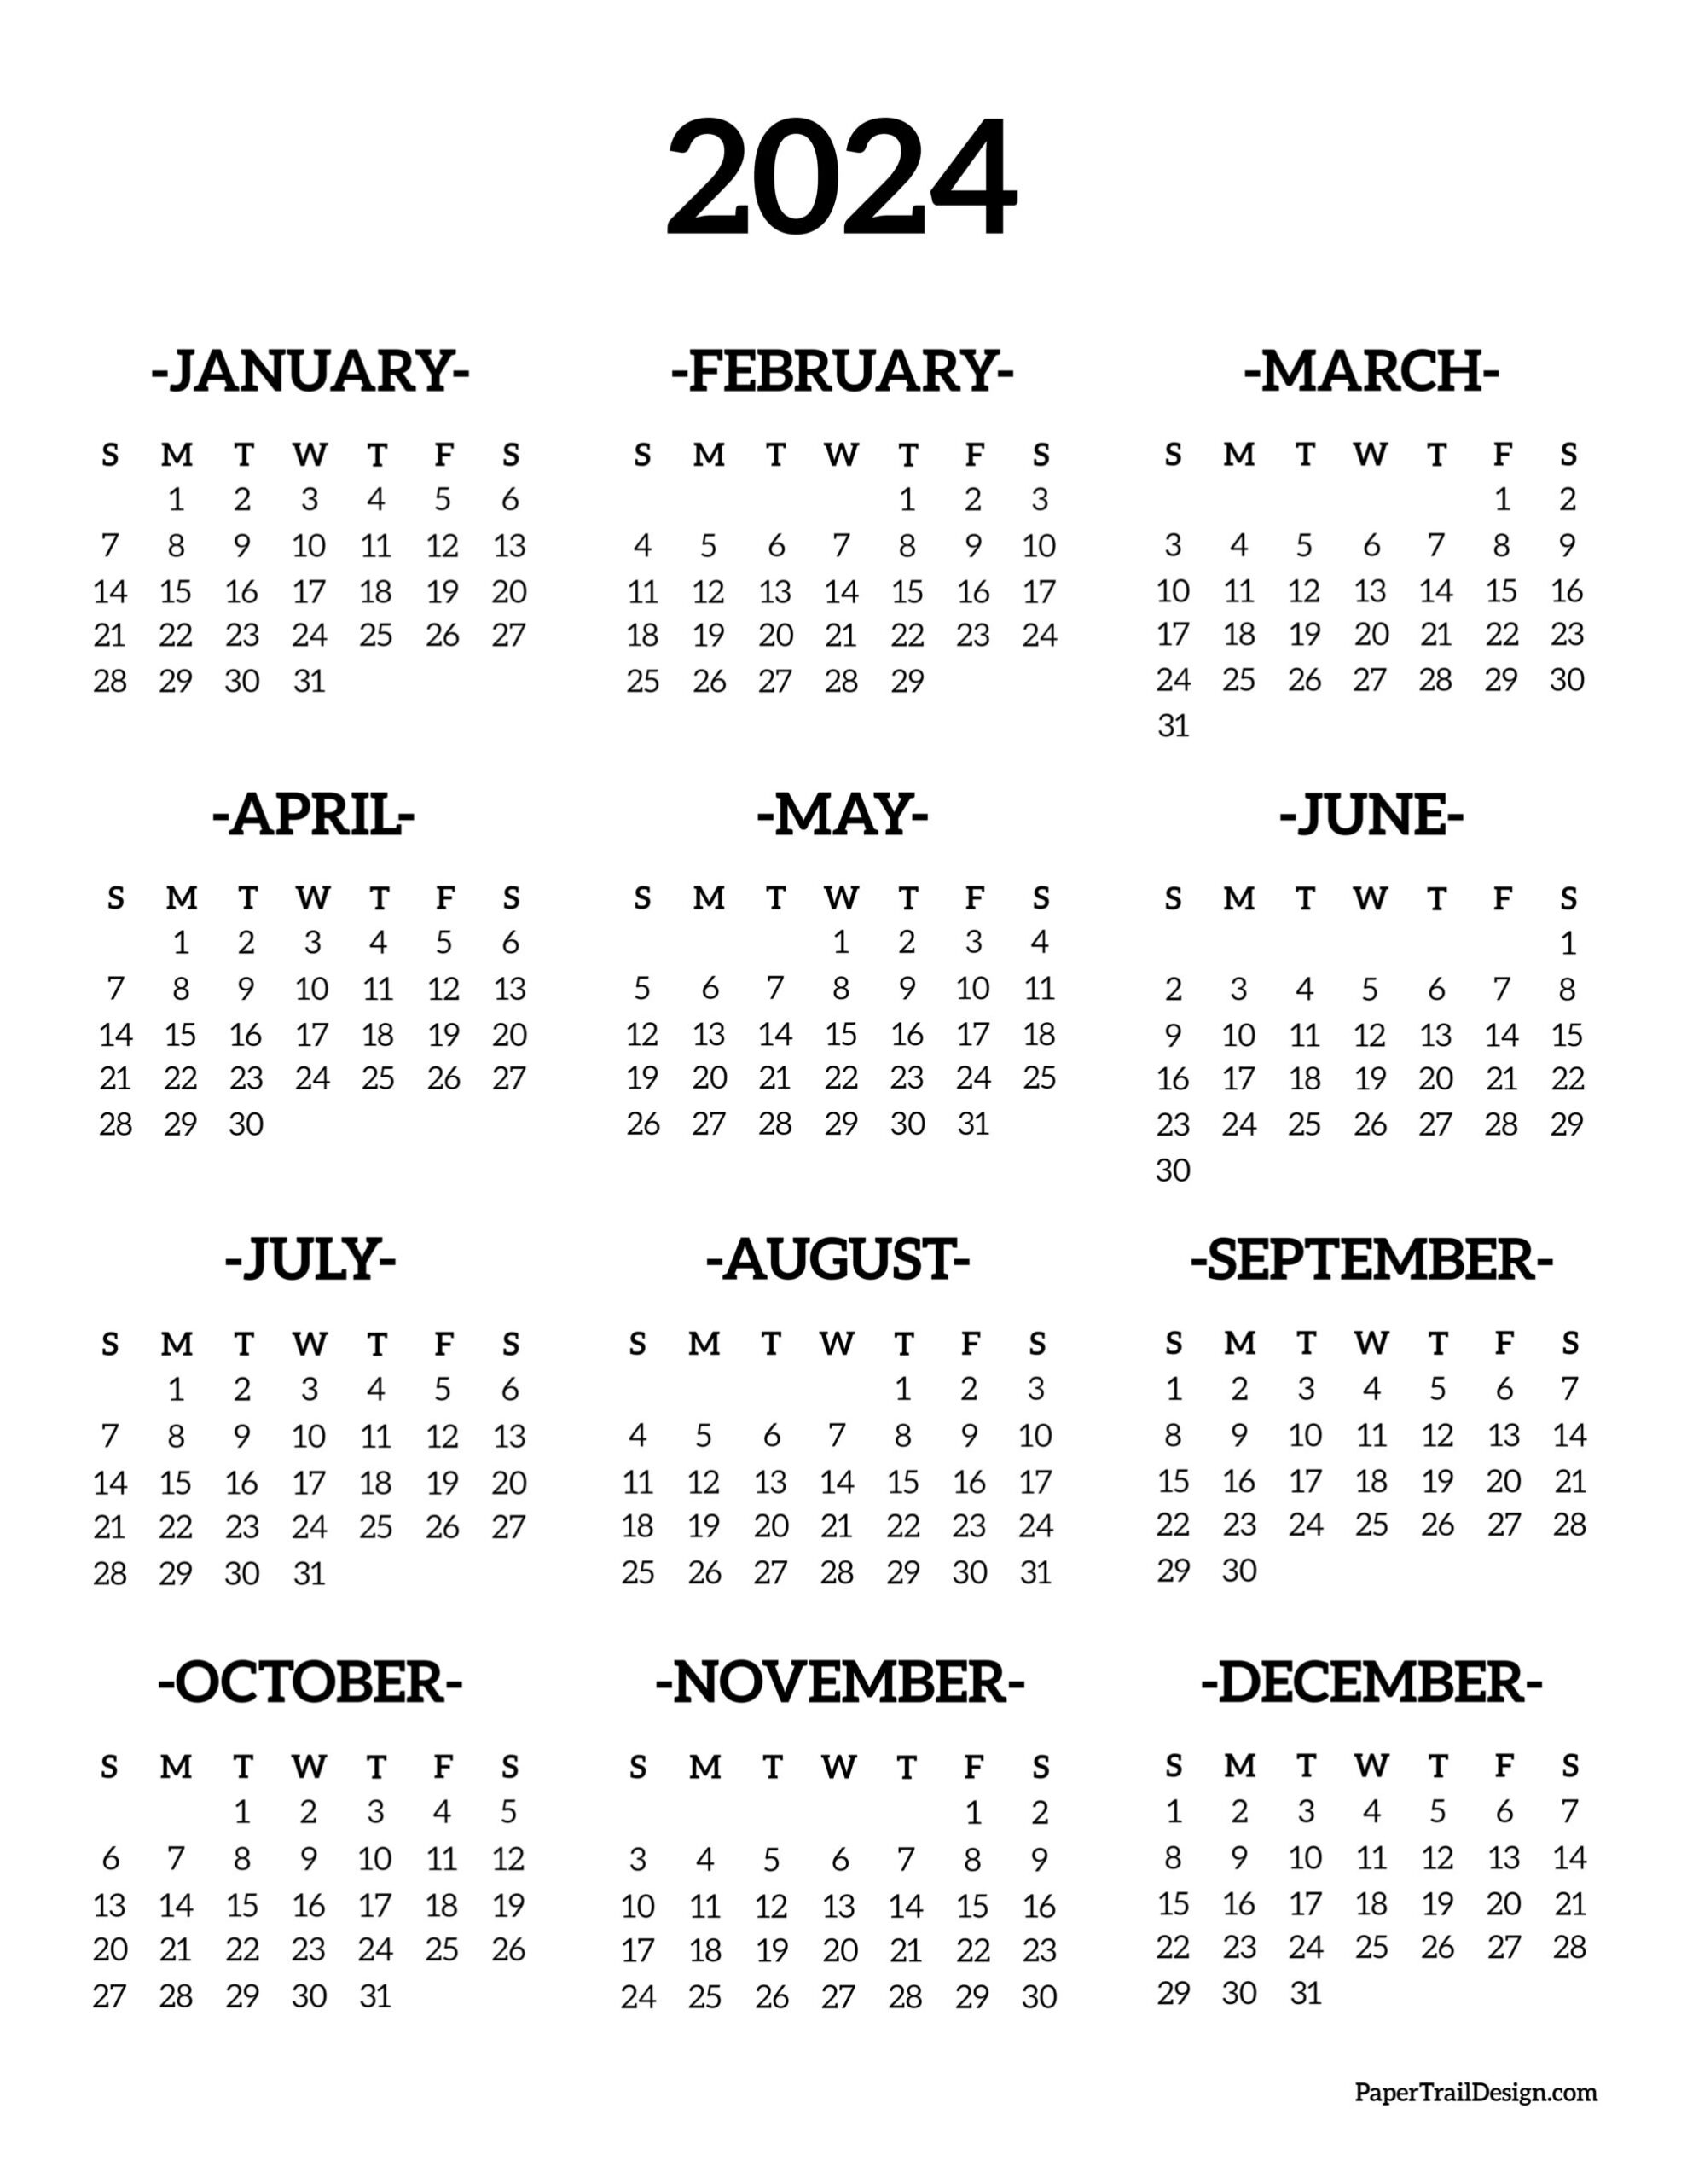 Calendar 2024 Printable One Page - Paper Trail Design | Printable Calendar 2024 Whole Year